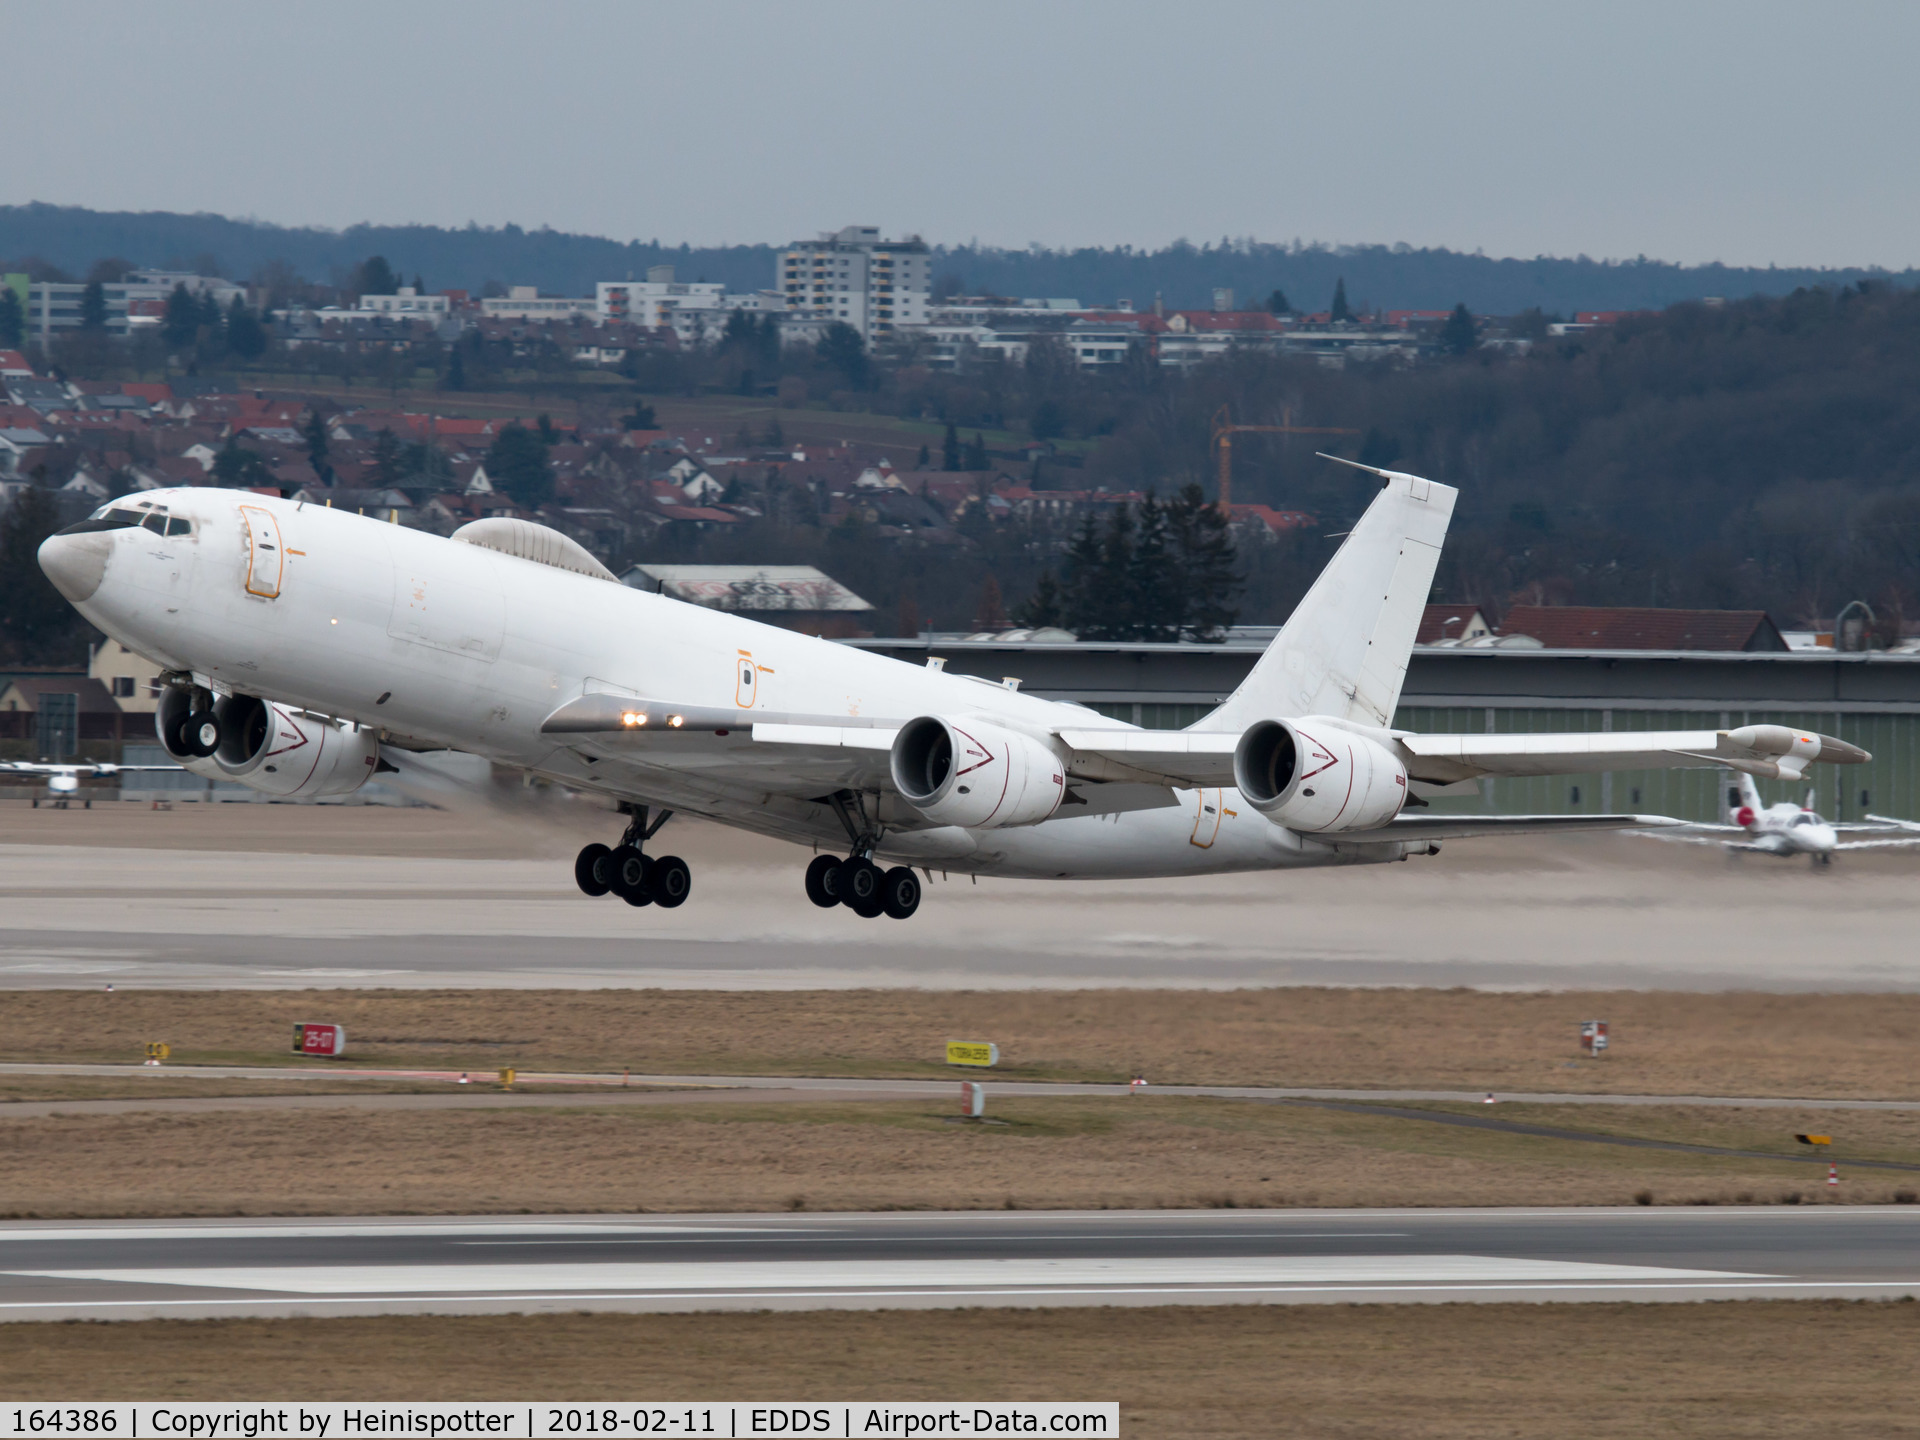 164386, 1989 Boeing E-6B Mercury C/N 23894, 164386 at Stuttgart Airport.